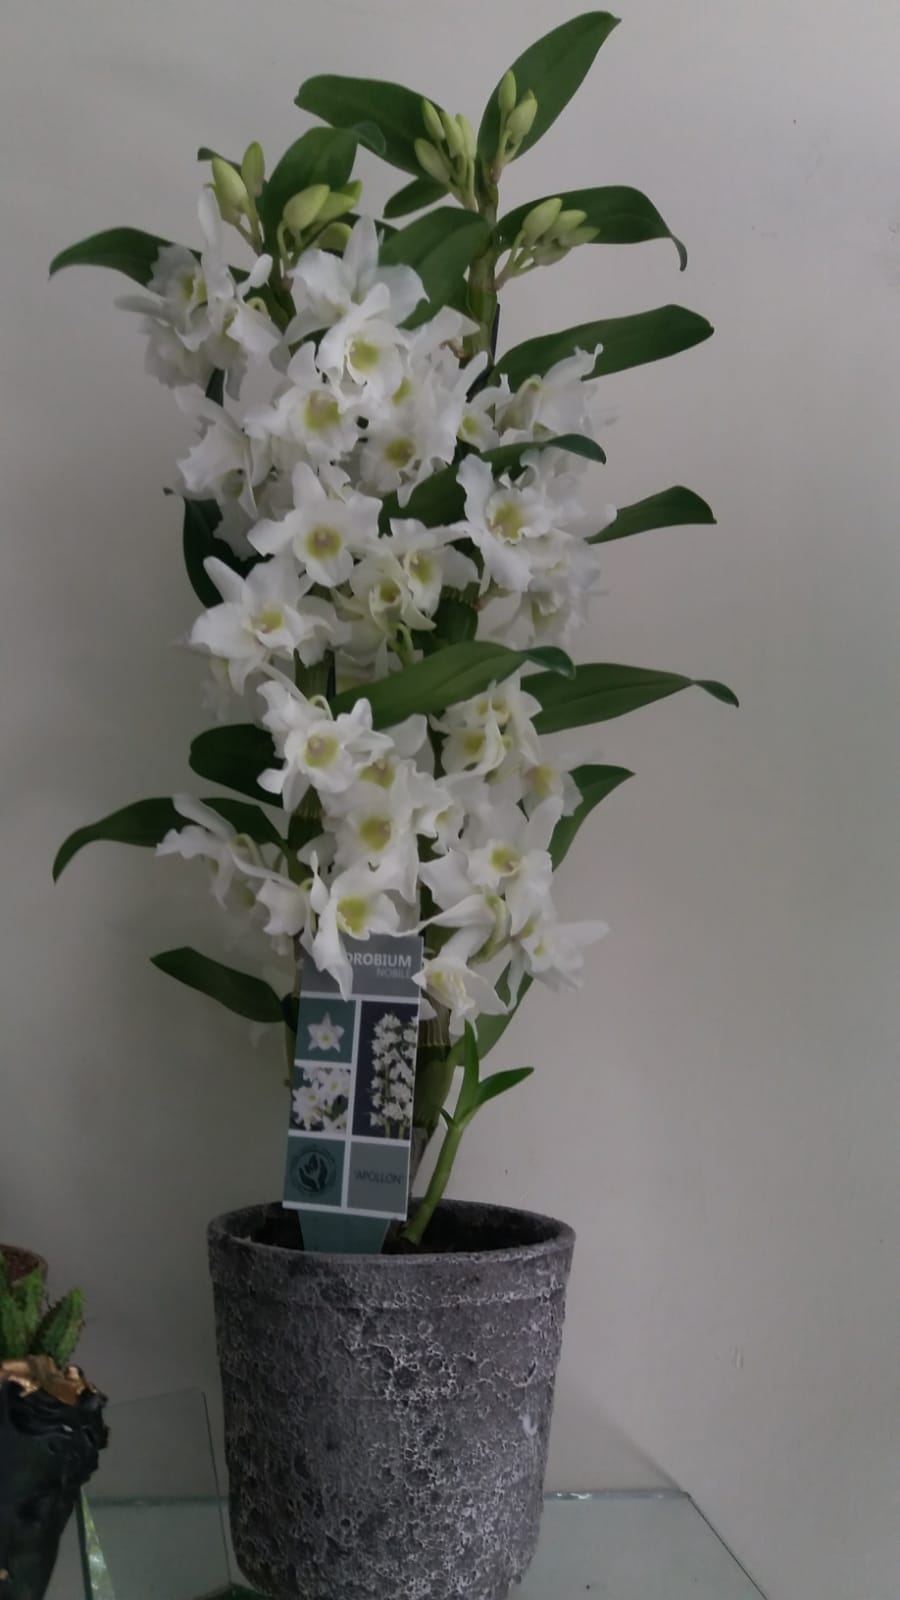 Dendoryum orkide